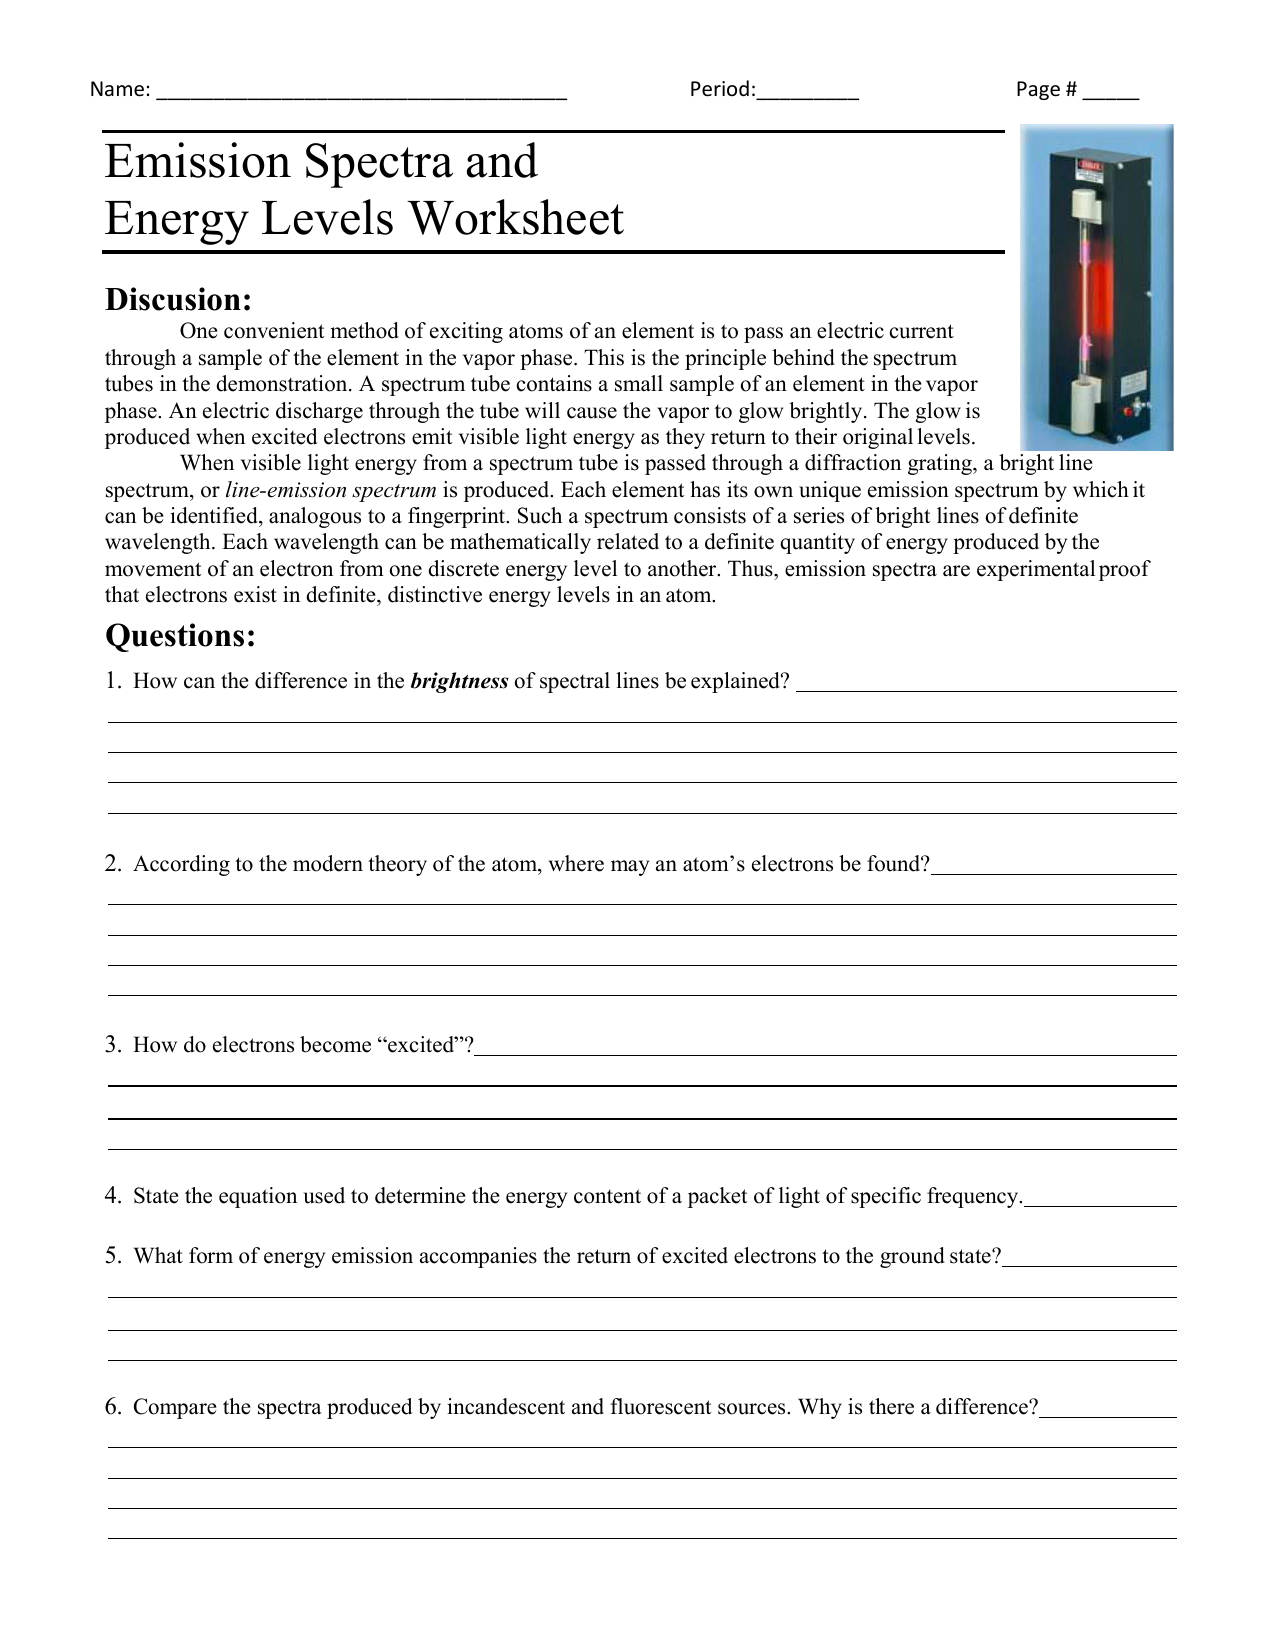 Emission Spectra And Energy Levels Worksheet